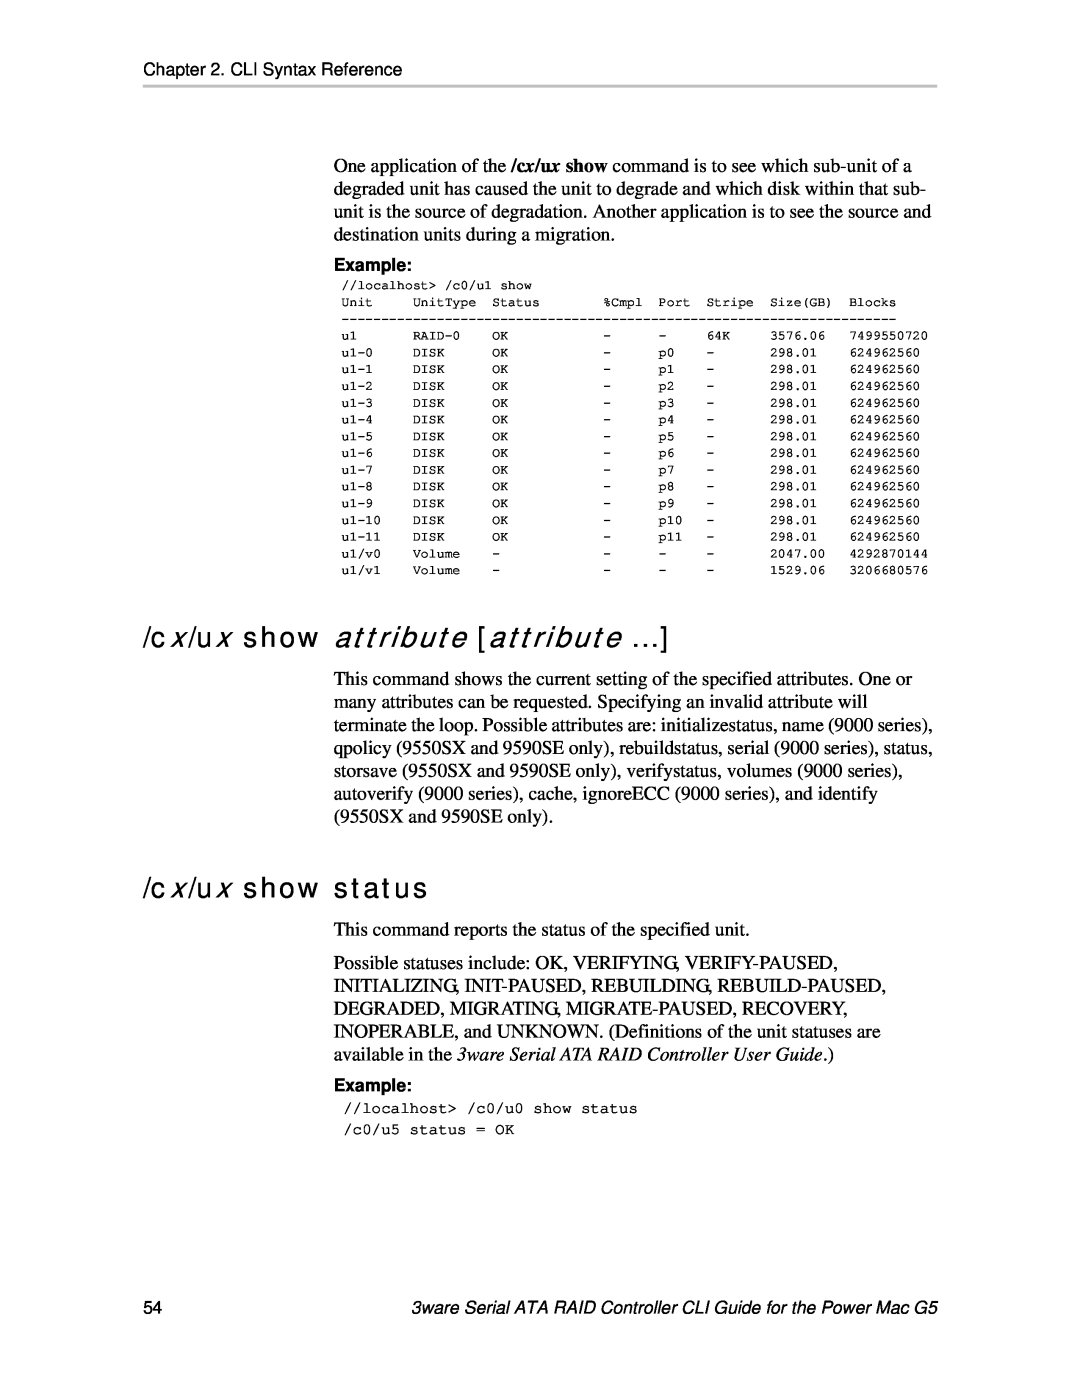 AMCC 9590SE-4ME manual cx/ux show attribute attribute, cx/ux show status 